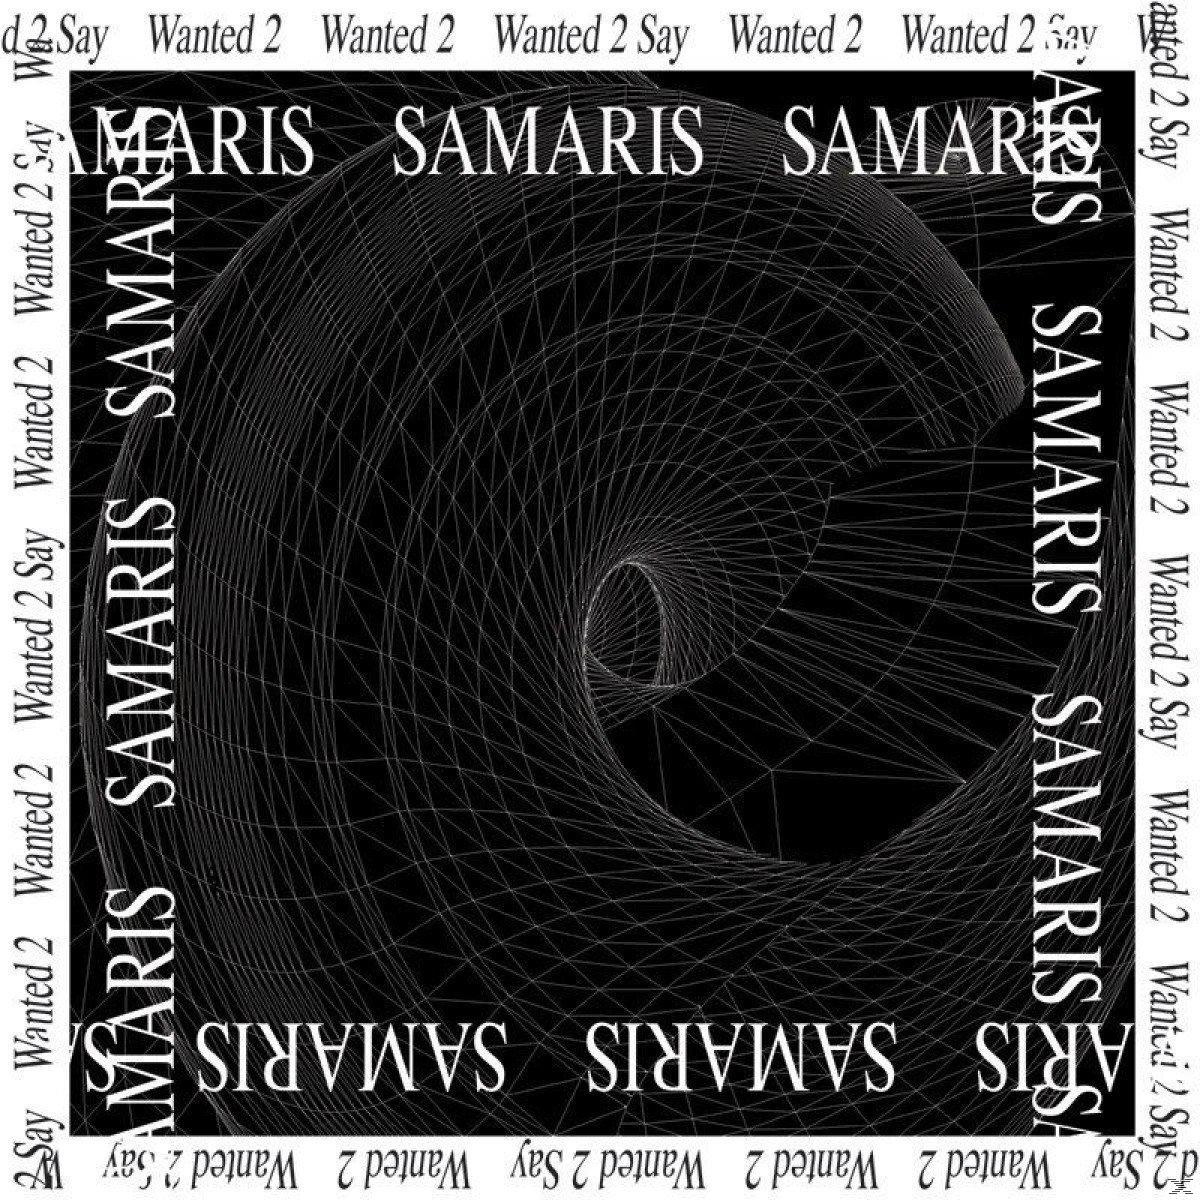 Samaris - - Wanted (Vinyl) Say 2